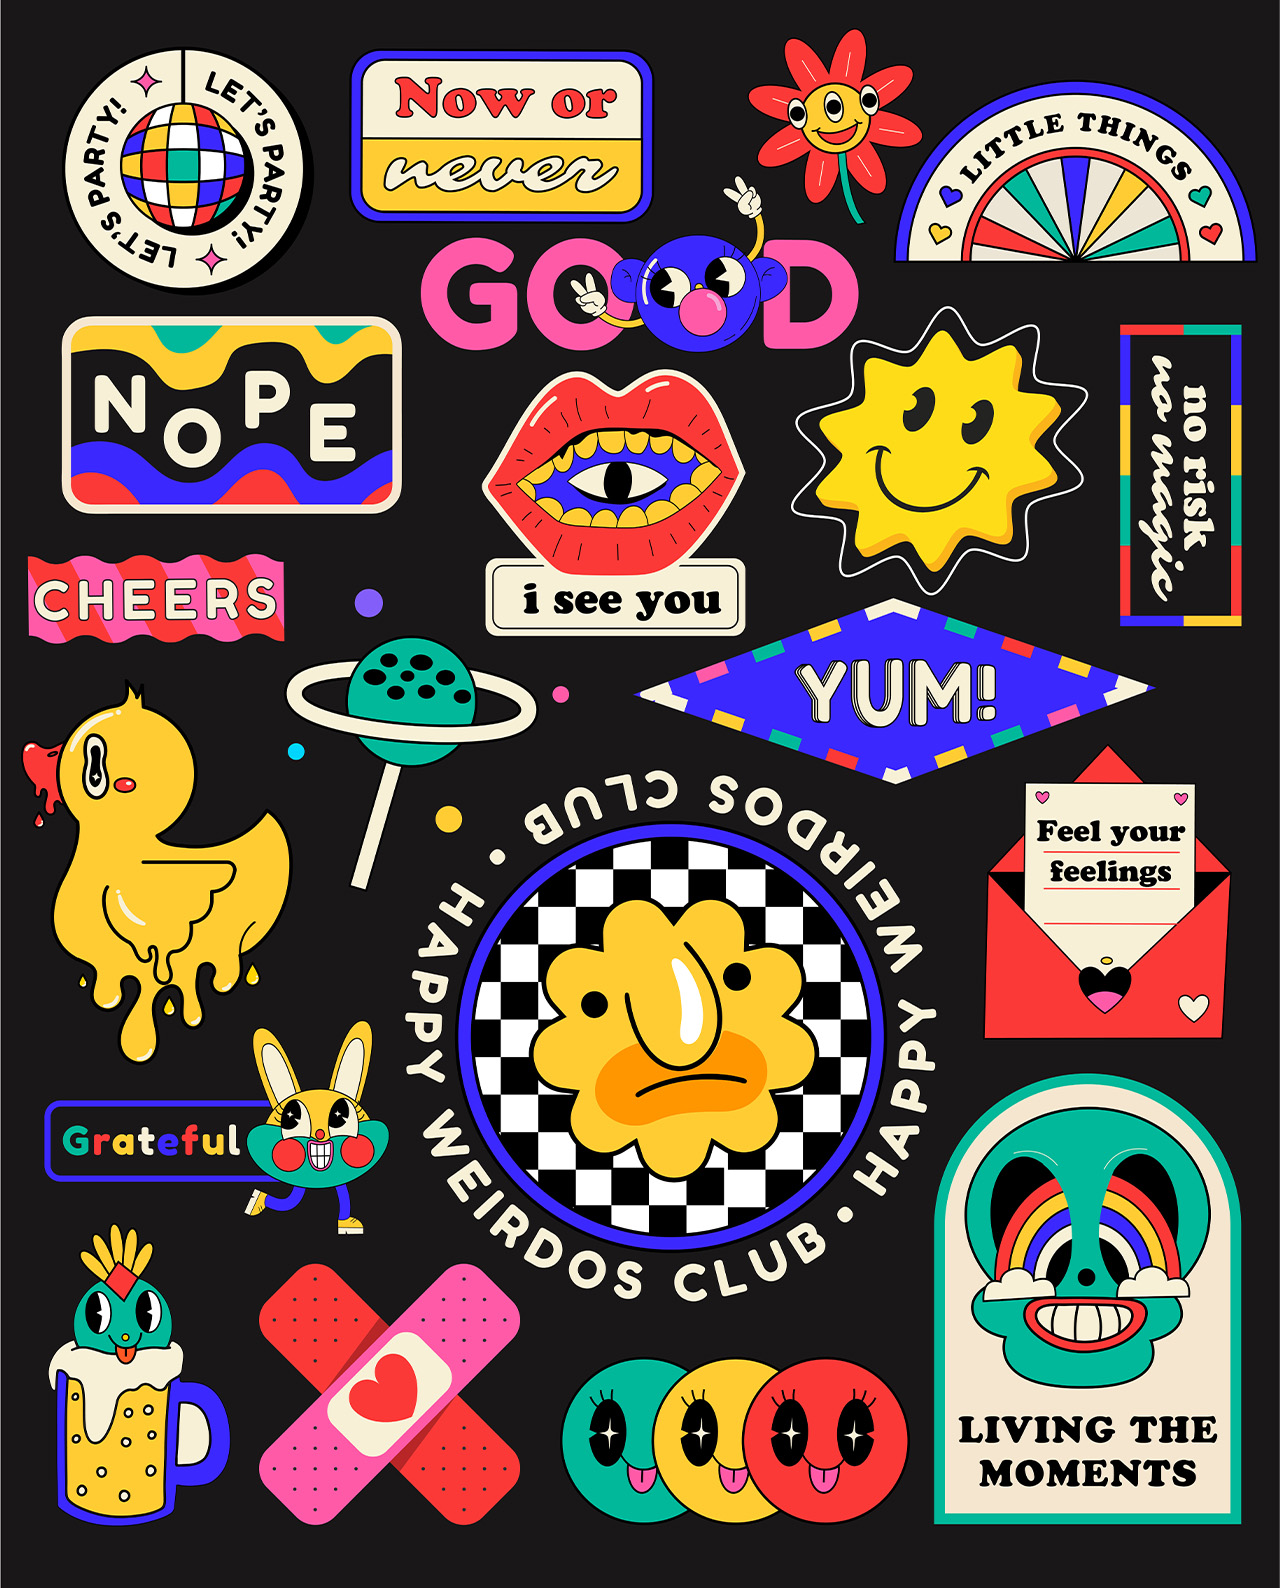 Sticker Pack (30+ Stickers)  Sticker design, Cover art design